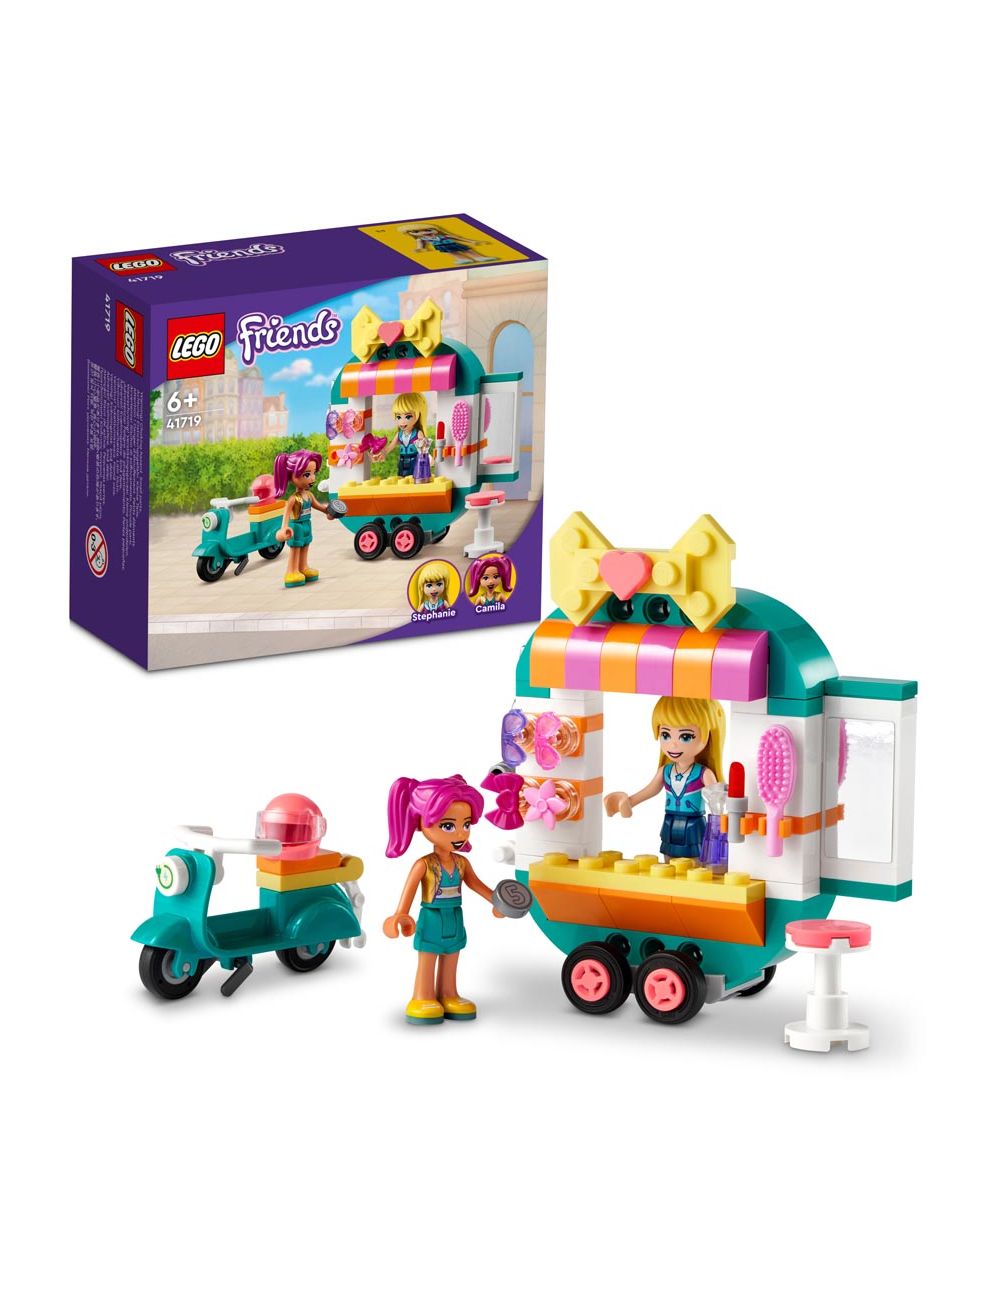 LEGO Friends Mobilny Butik 41719